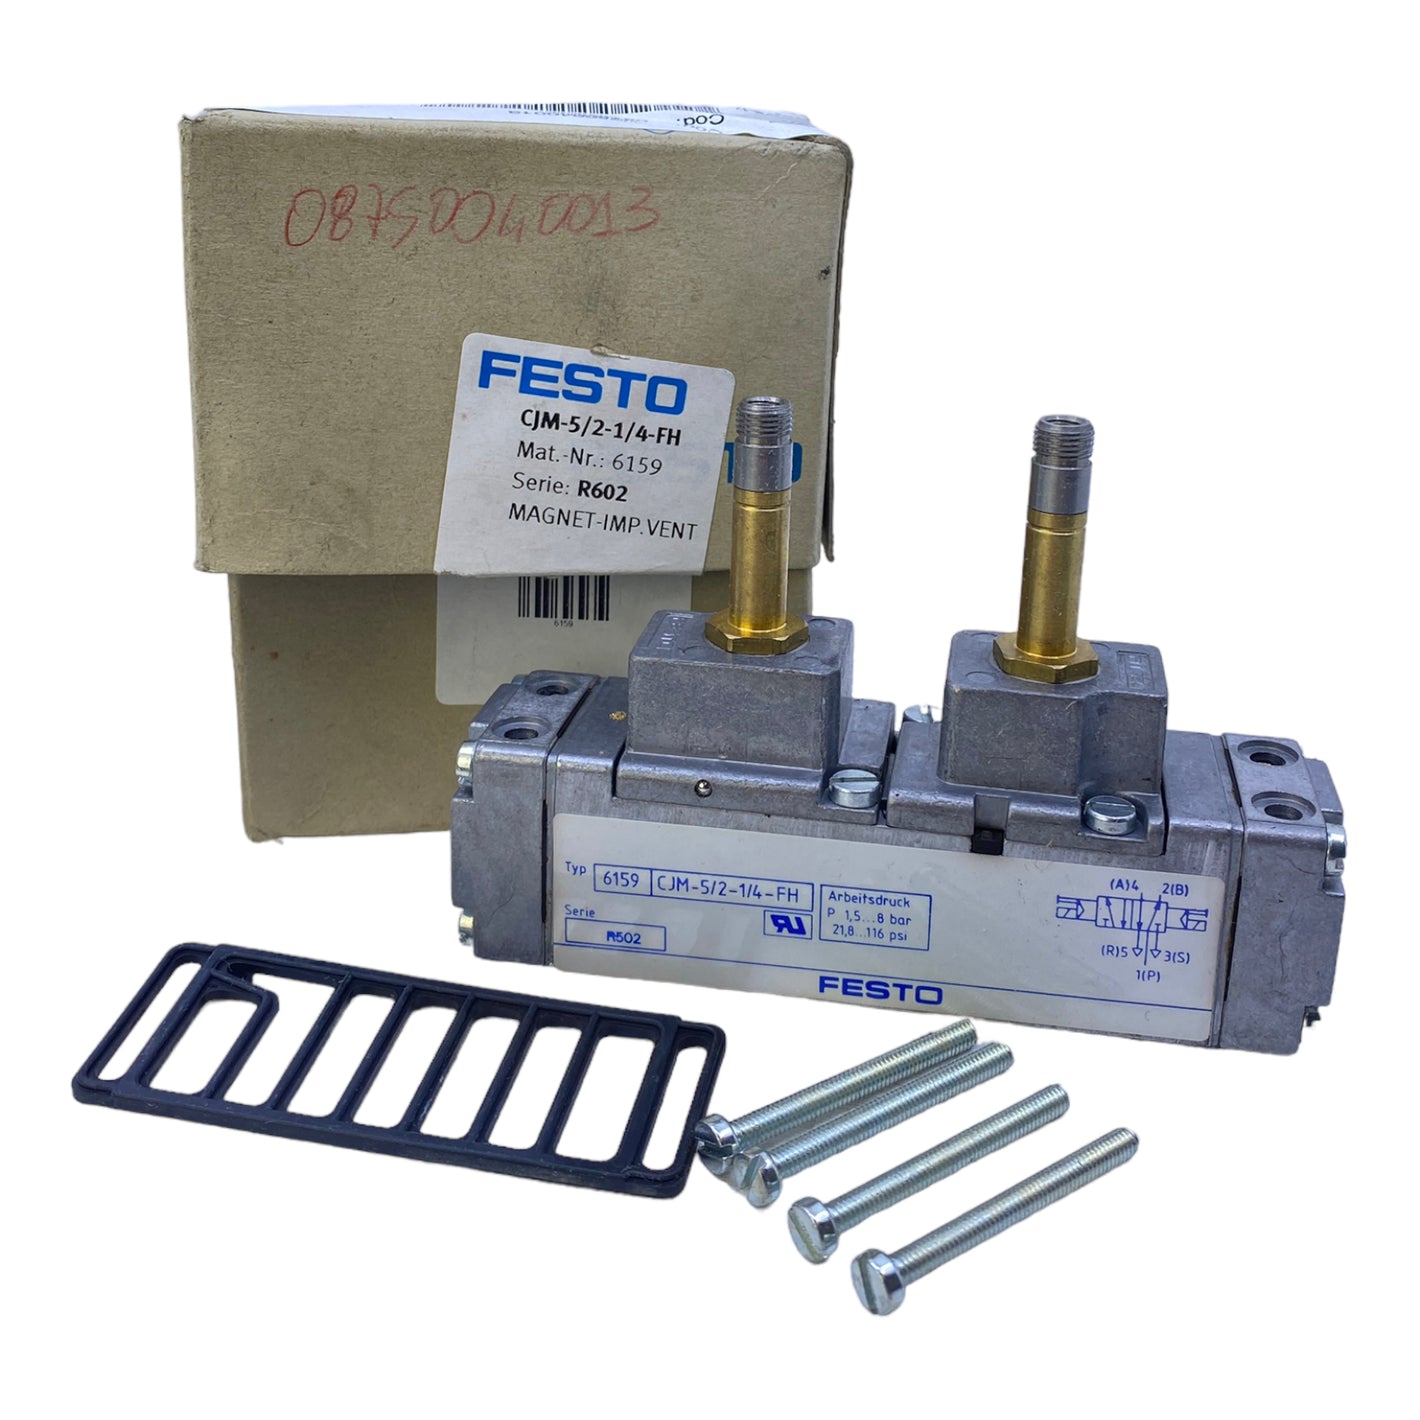 Festo CJM-5/2-1/4-FH solenoid valve 6159 1.5 to 8 bar 5/2 bistable electric 